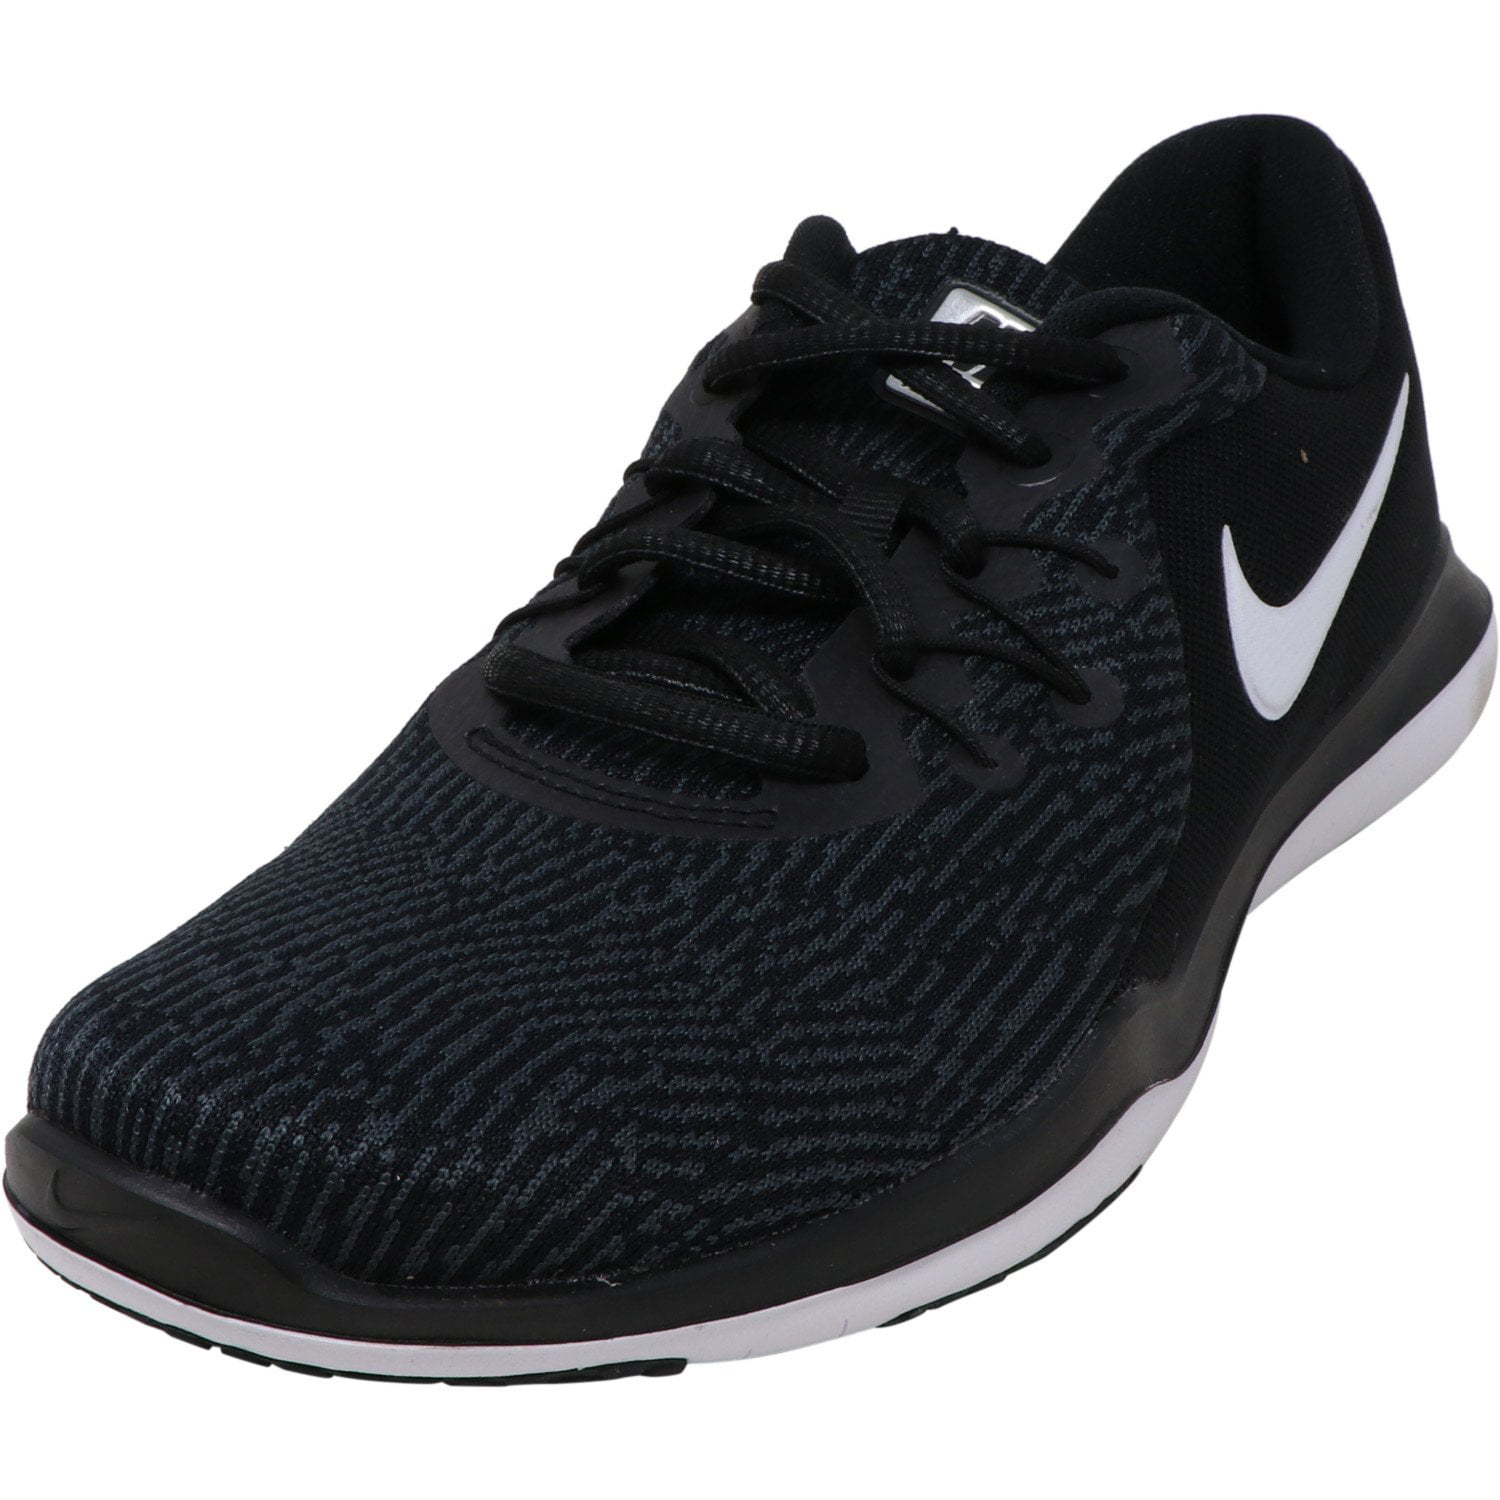 Nike Flex Supreme Tr 6 Training Shoes - 7.5M - Black / White / Anthracite -  Walmart.com